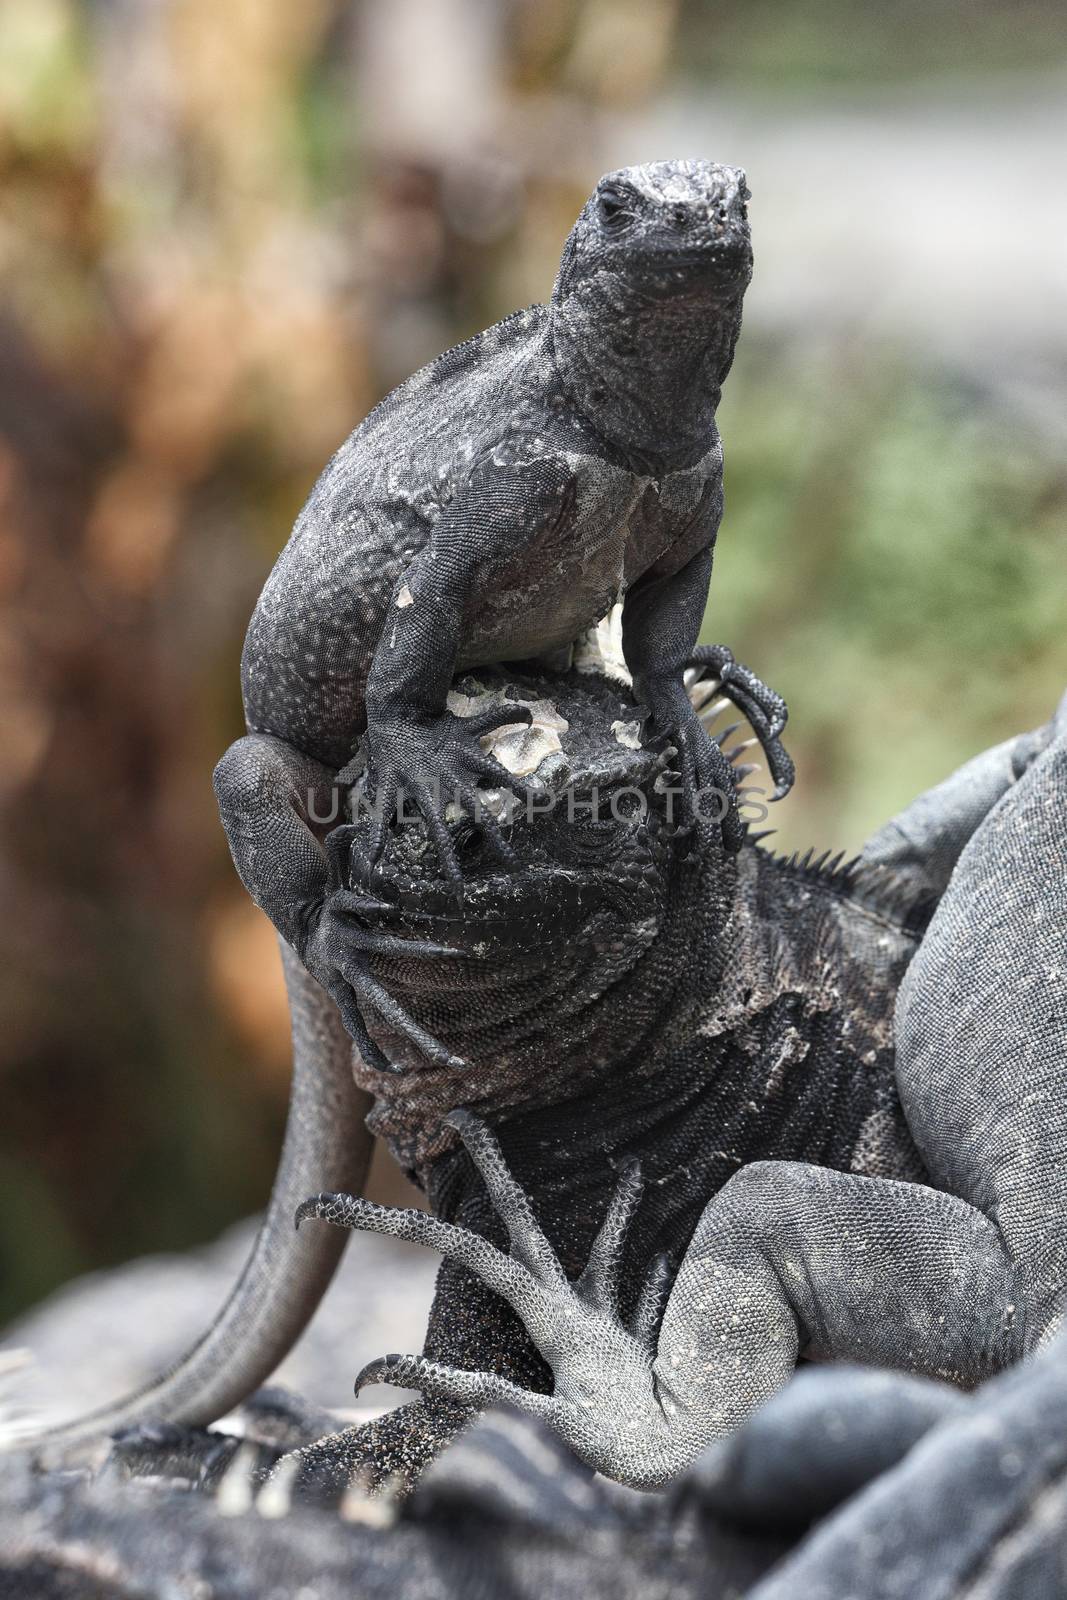 Galapagos funny animals - Marine Iguana with smaller marine iguana on its head by Maridav